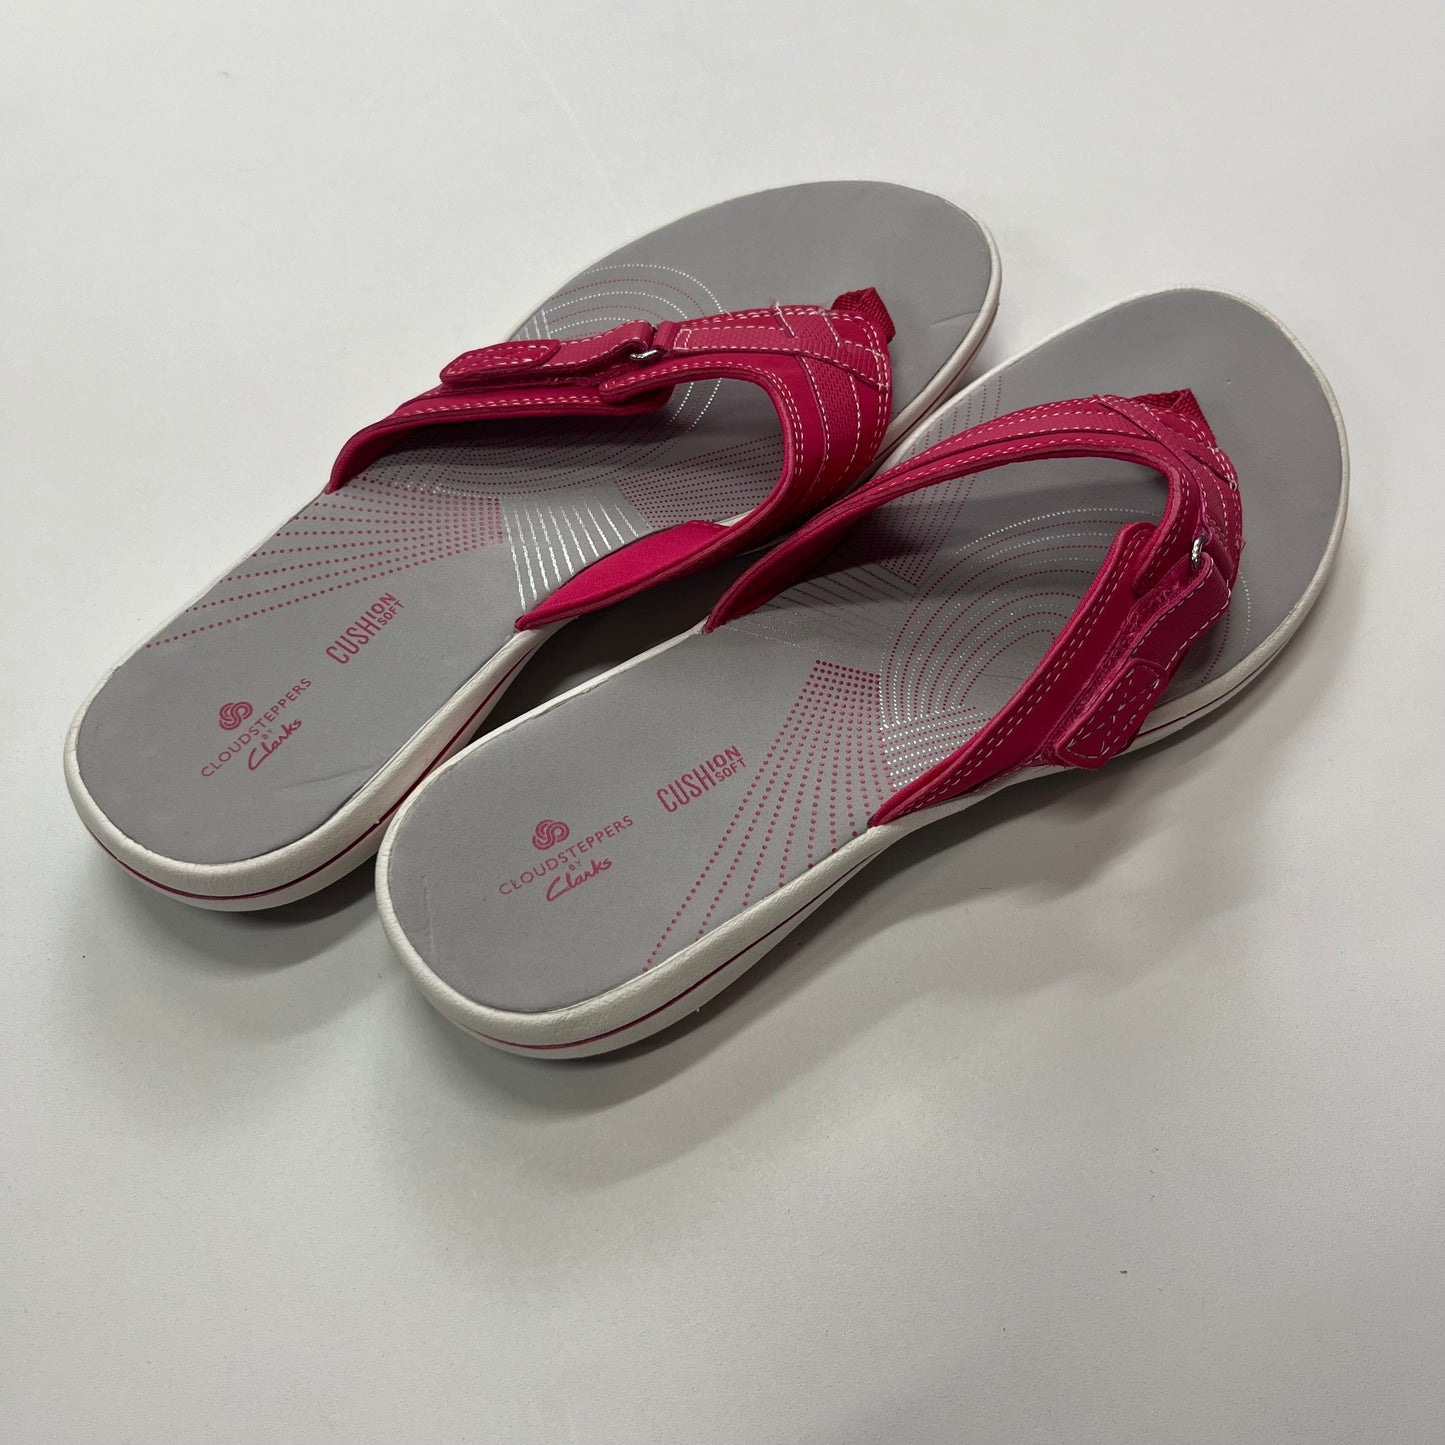 Sandals Flip Flops By Clarks  Size: 8